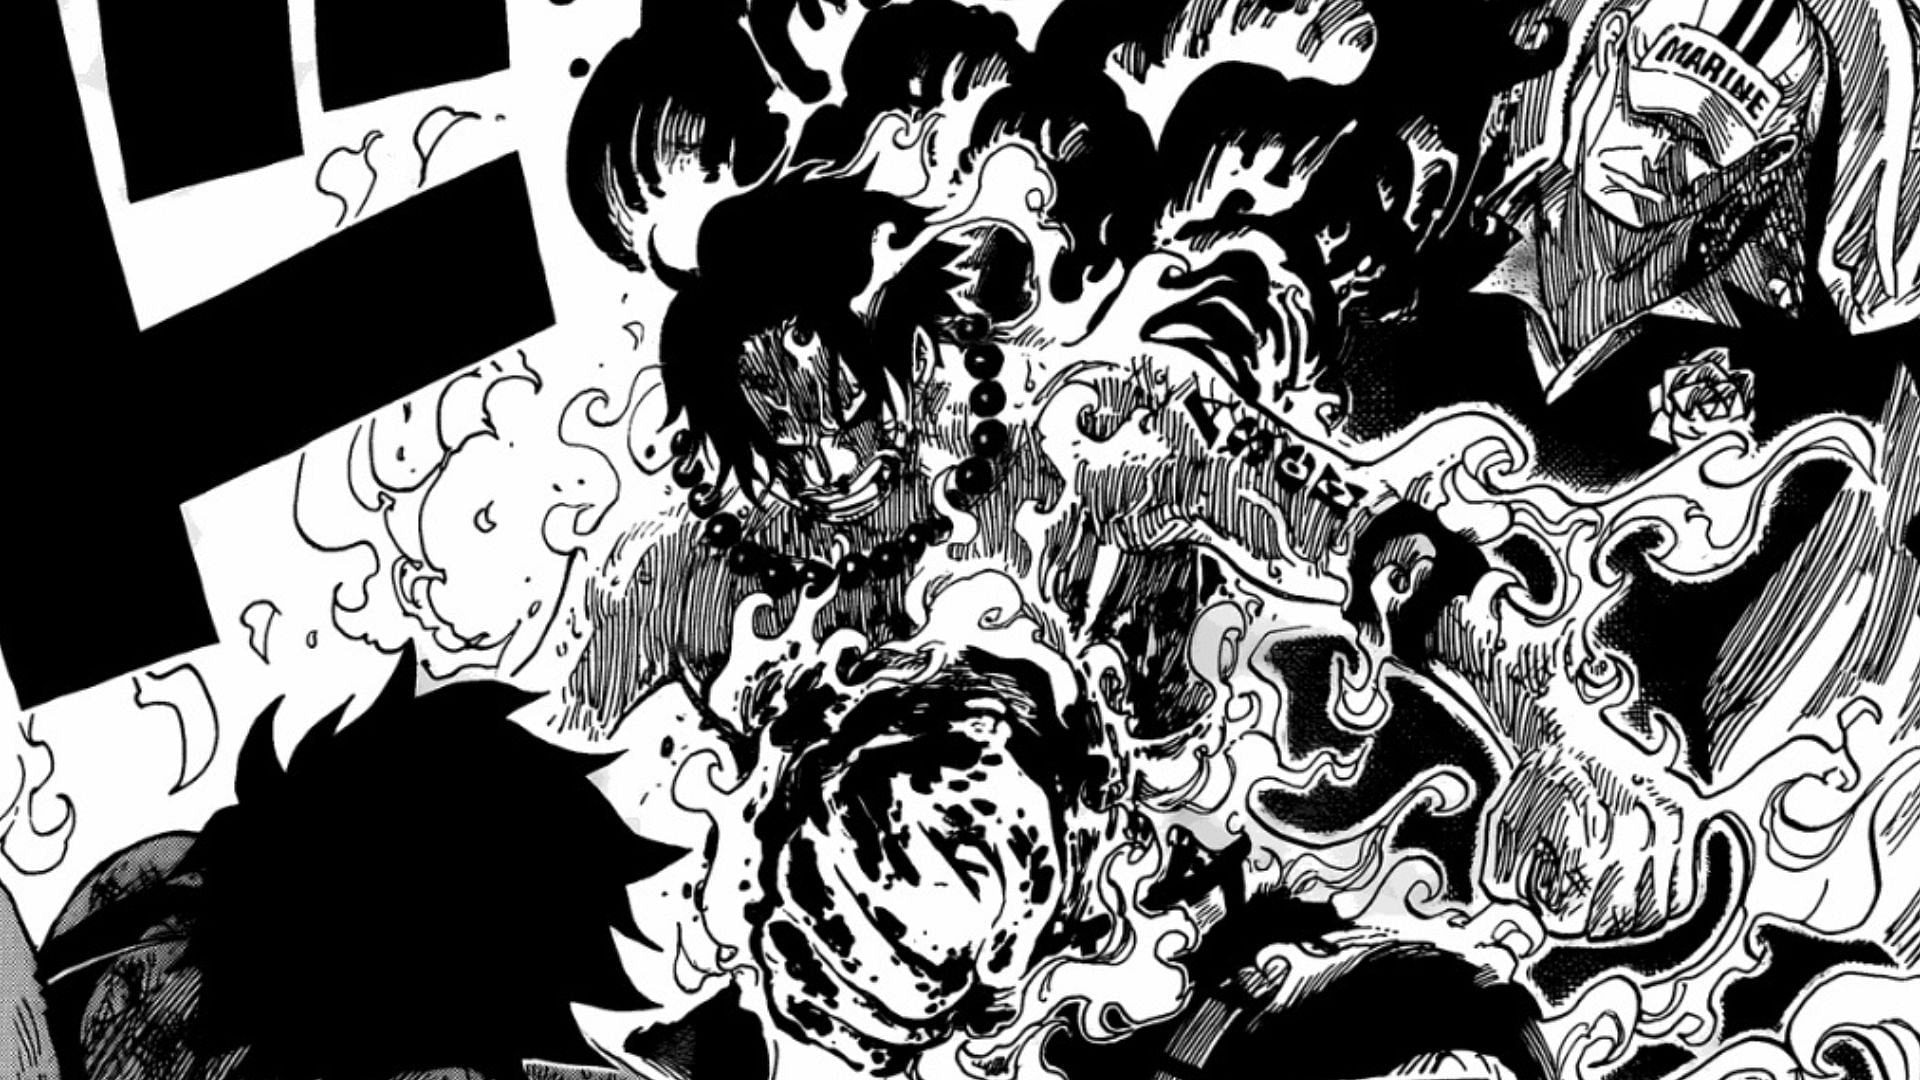 Ace sacrifices himself for Luffy (Image via Eiichiro Oda/Shueisha/Viz Media/One Piece)